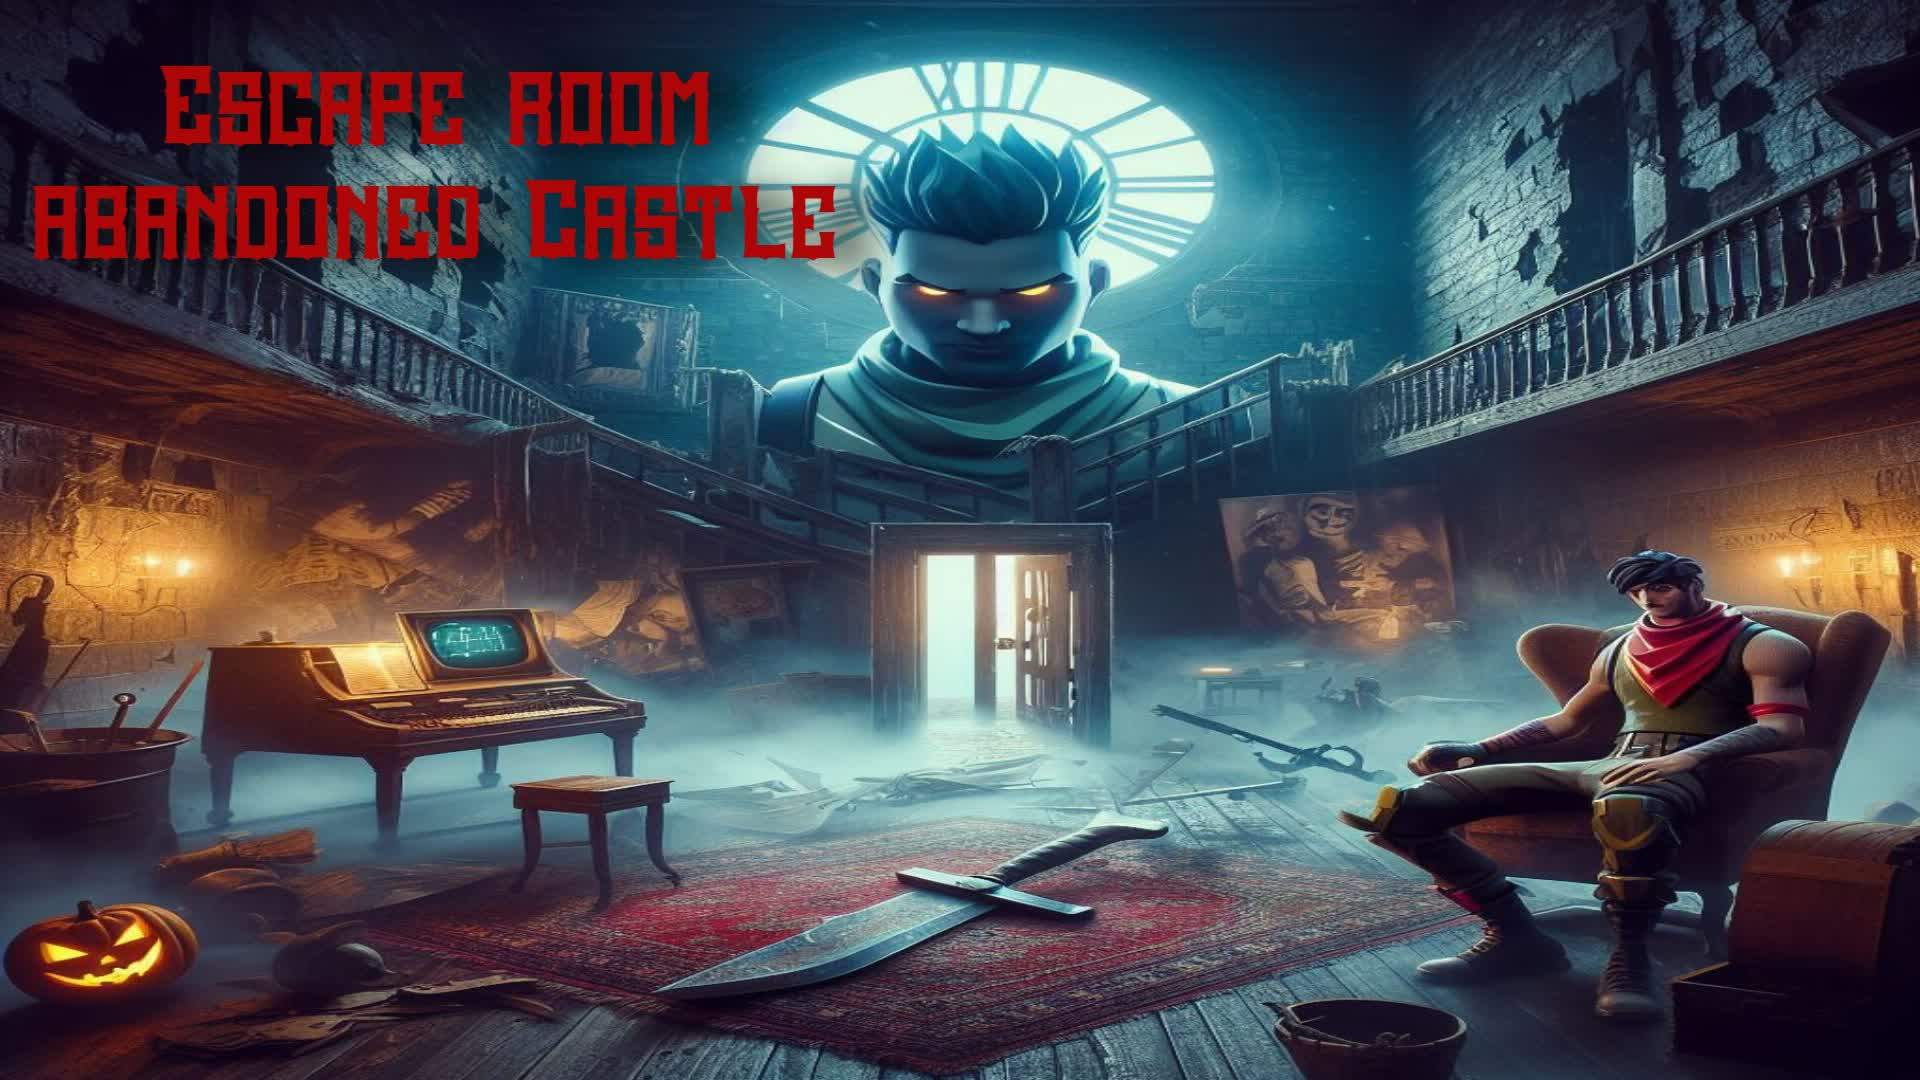 Escape room abandoned castle